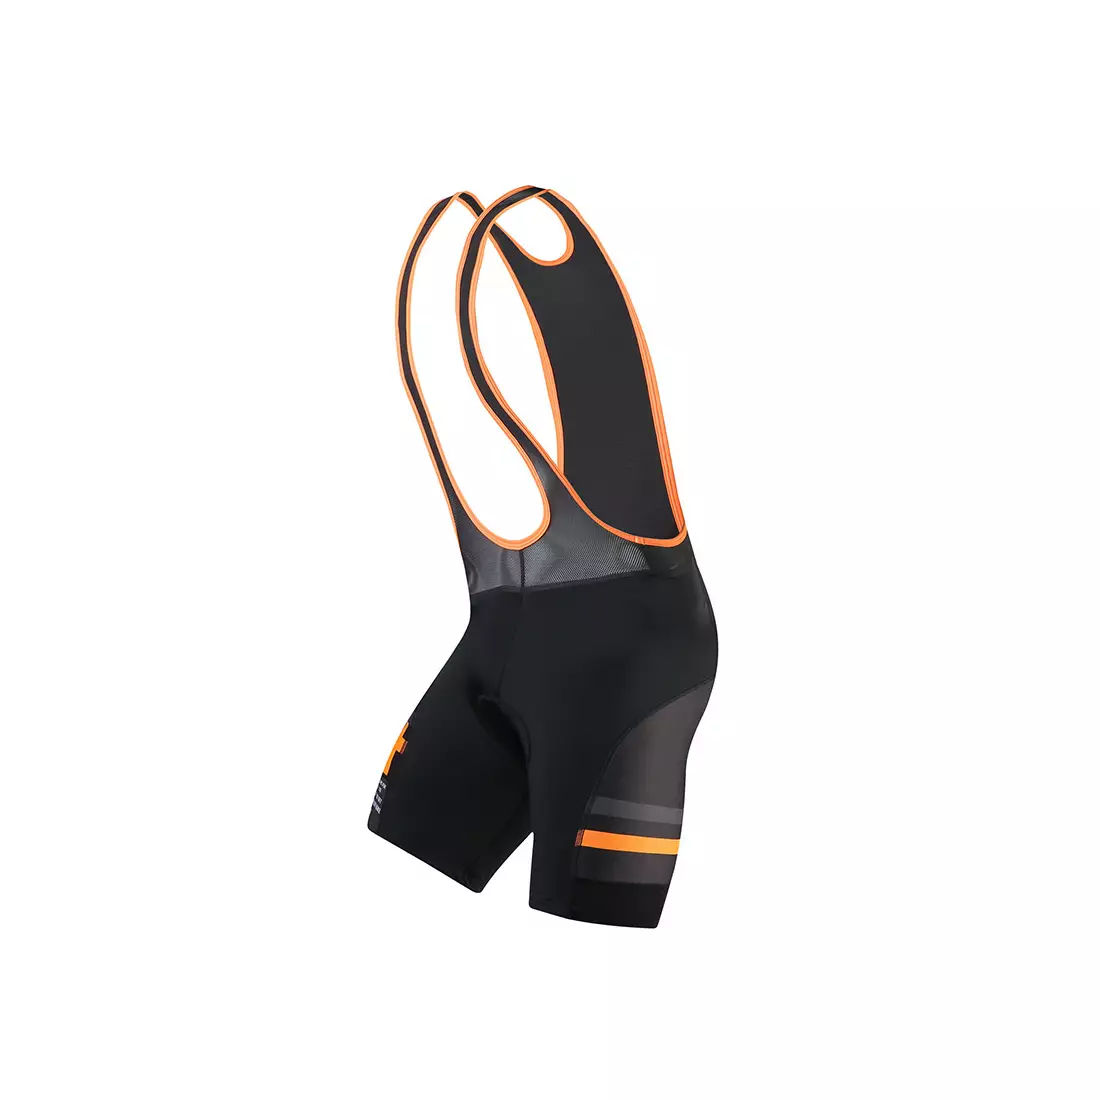 SANTIC M8C05099JU Men's bib shorts, black-orange